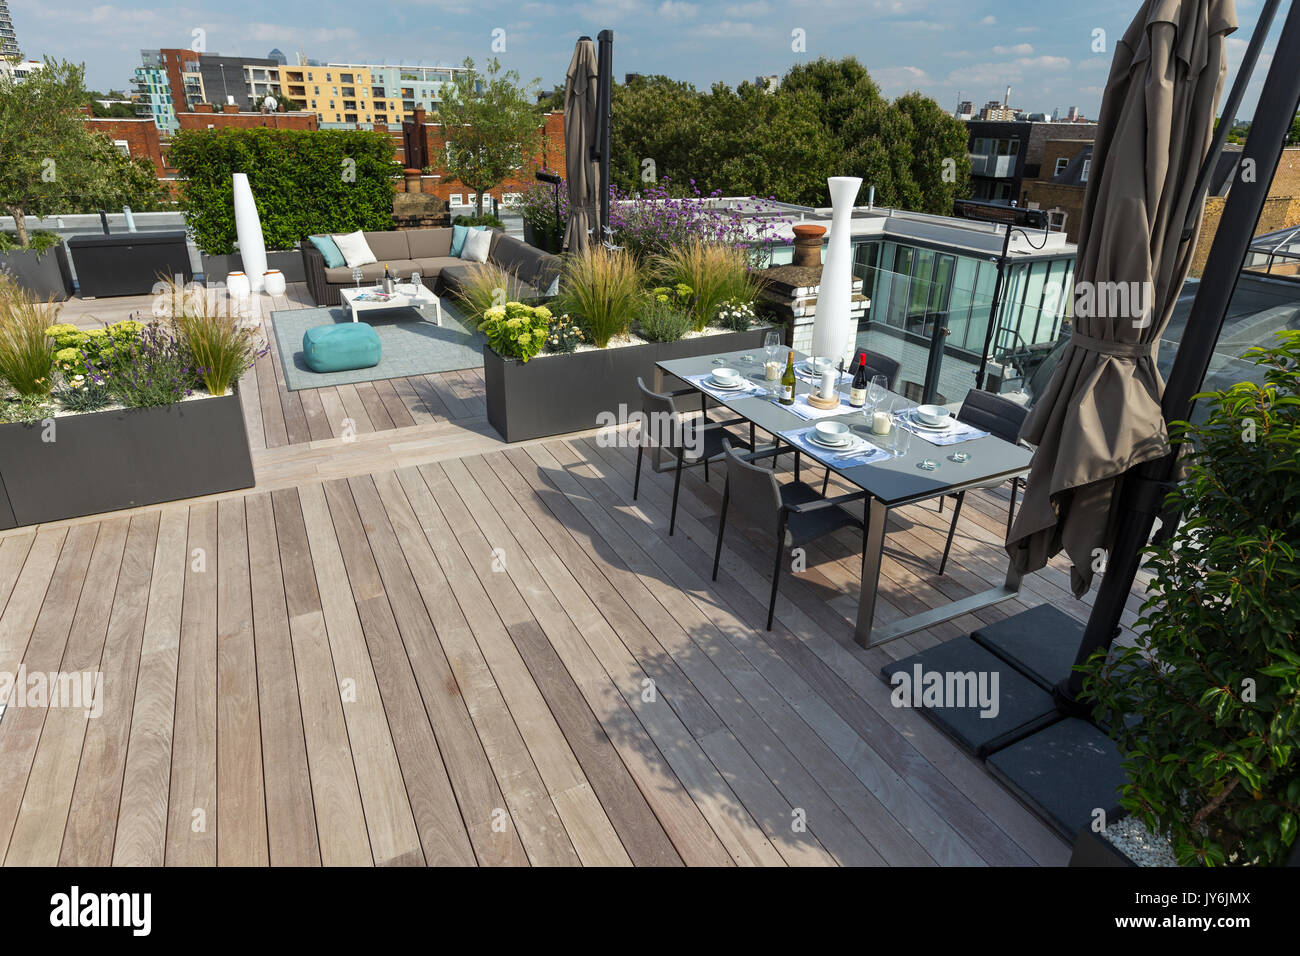 Lujoso ático con terraza en Londres con madera decking, sembradoras contemporáneo con frondosa vegetación y modernos muebles de exterior Foto de stock